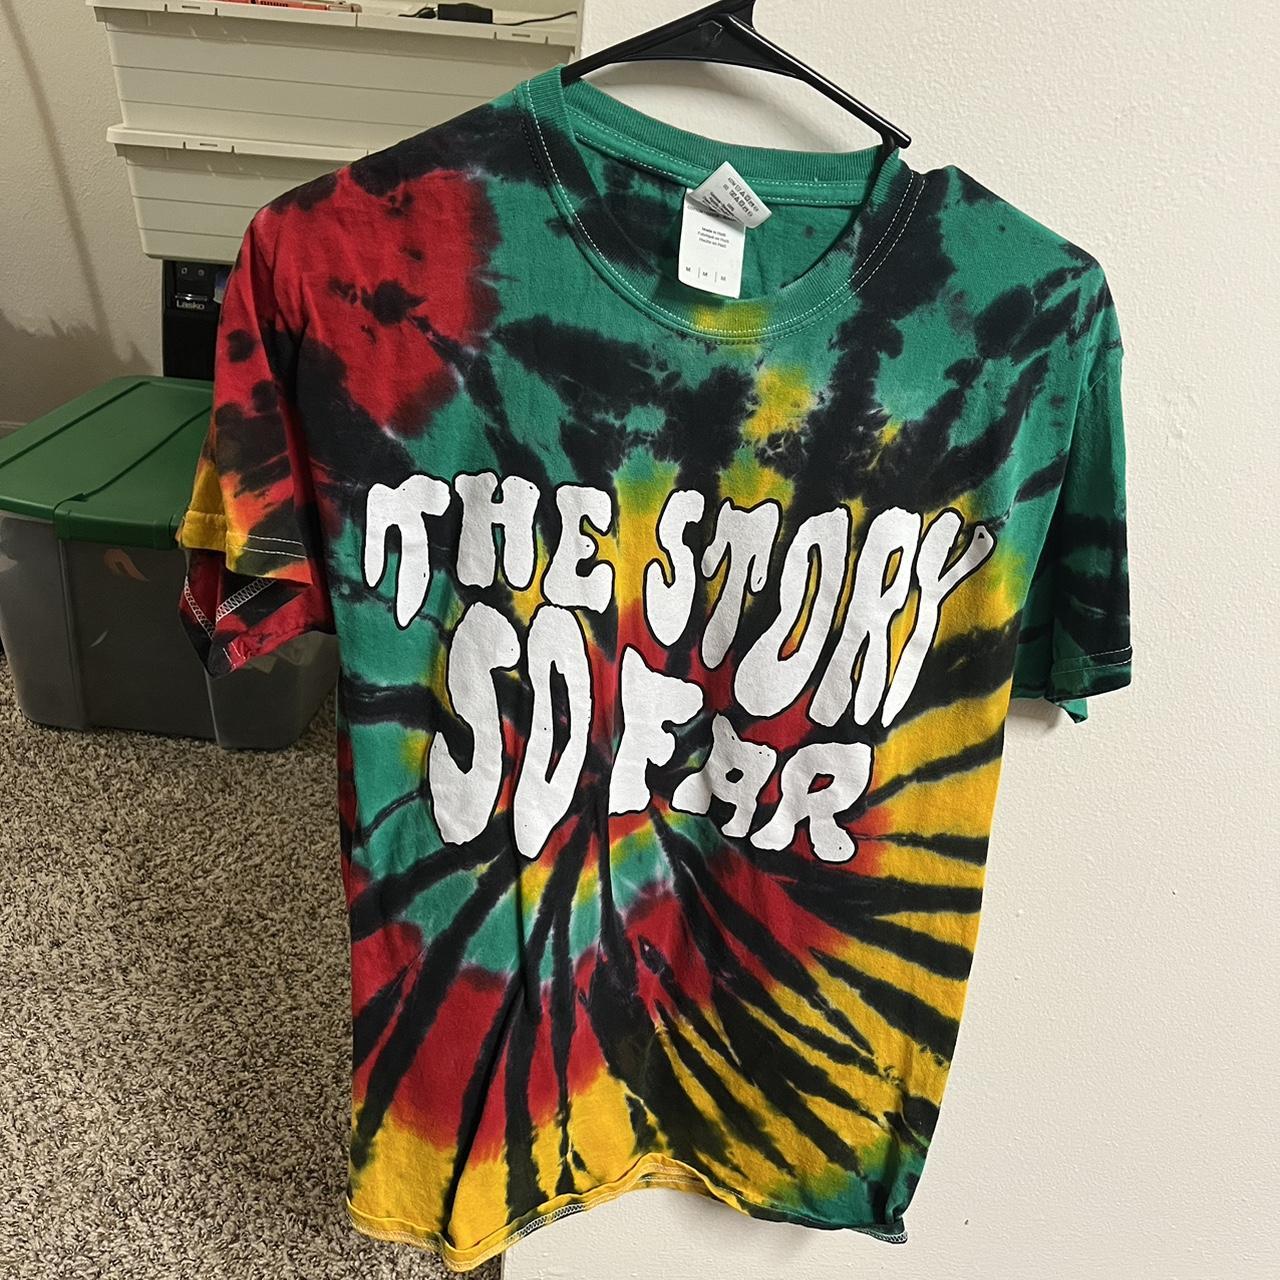 Rasta Tie-Dye Printed T-Shirt